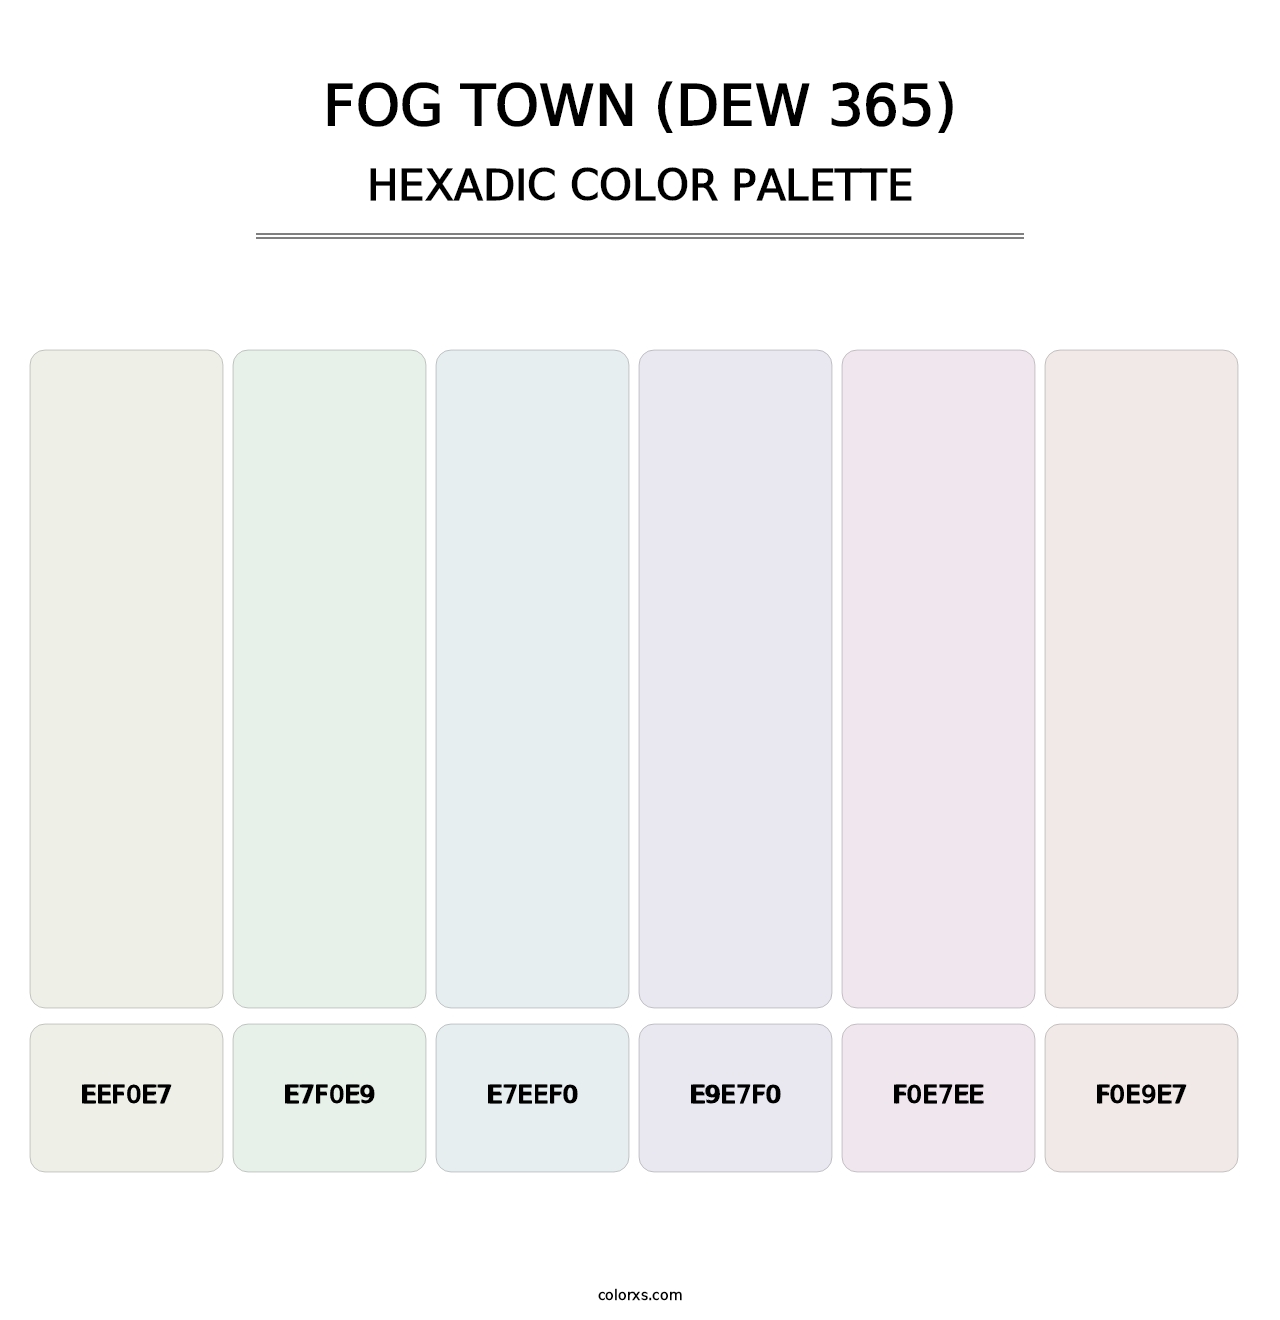 Fog Town (DEW 365) - Hexadic Color Palette